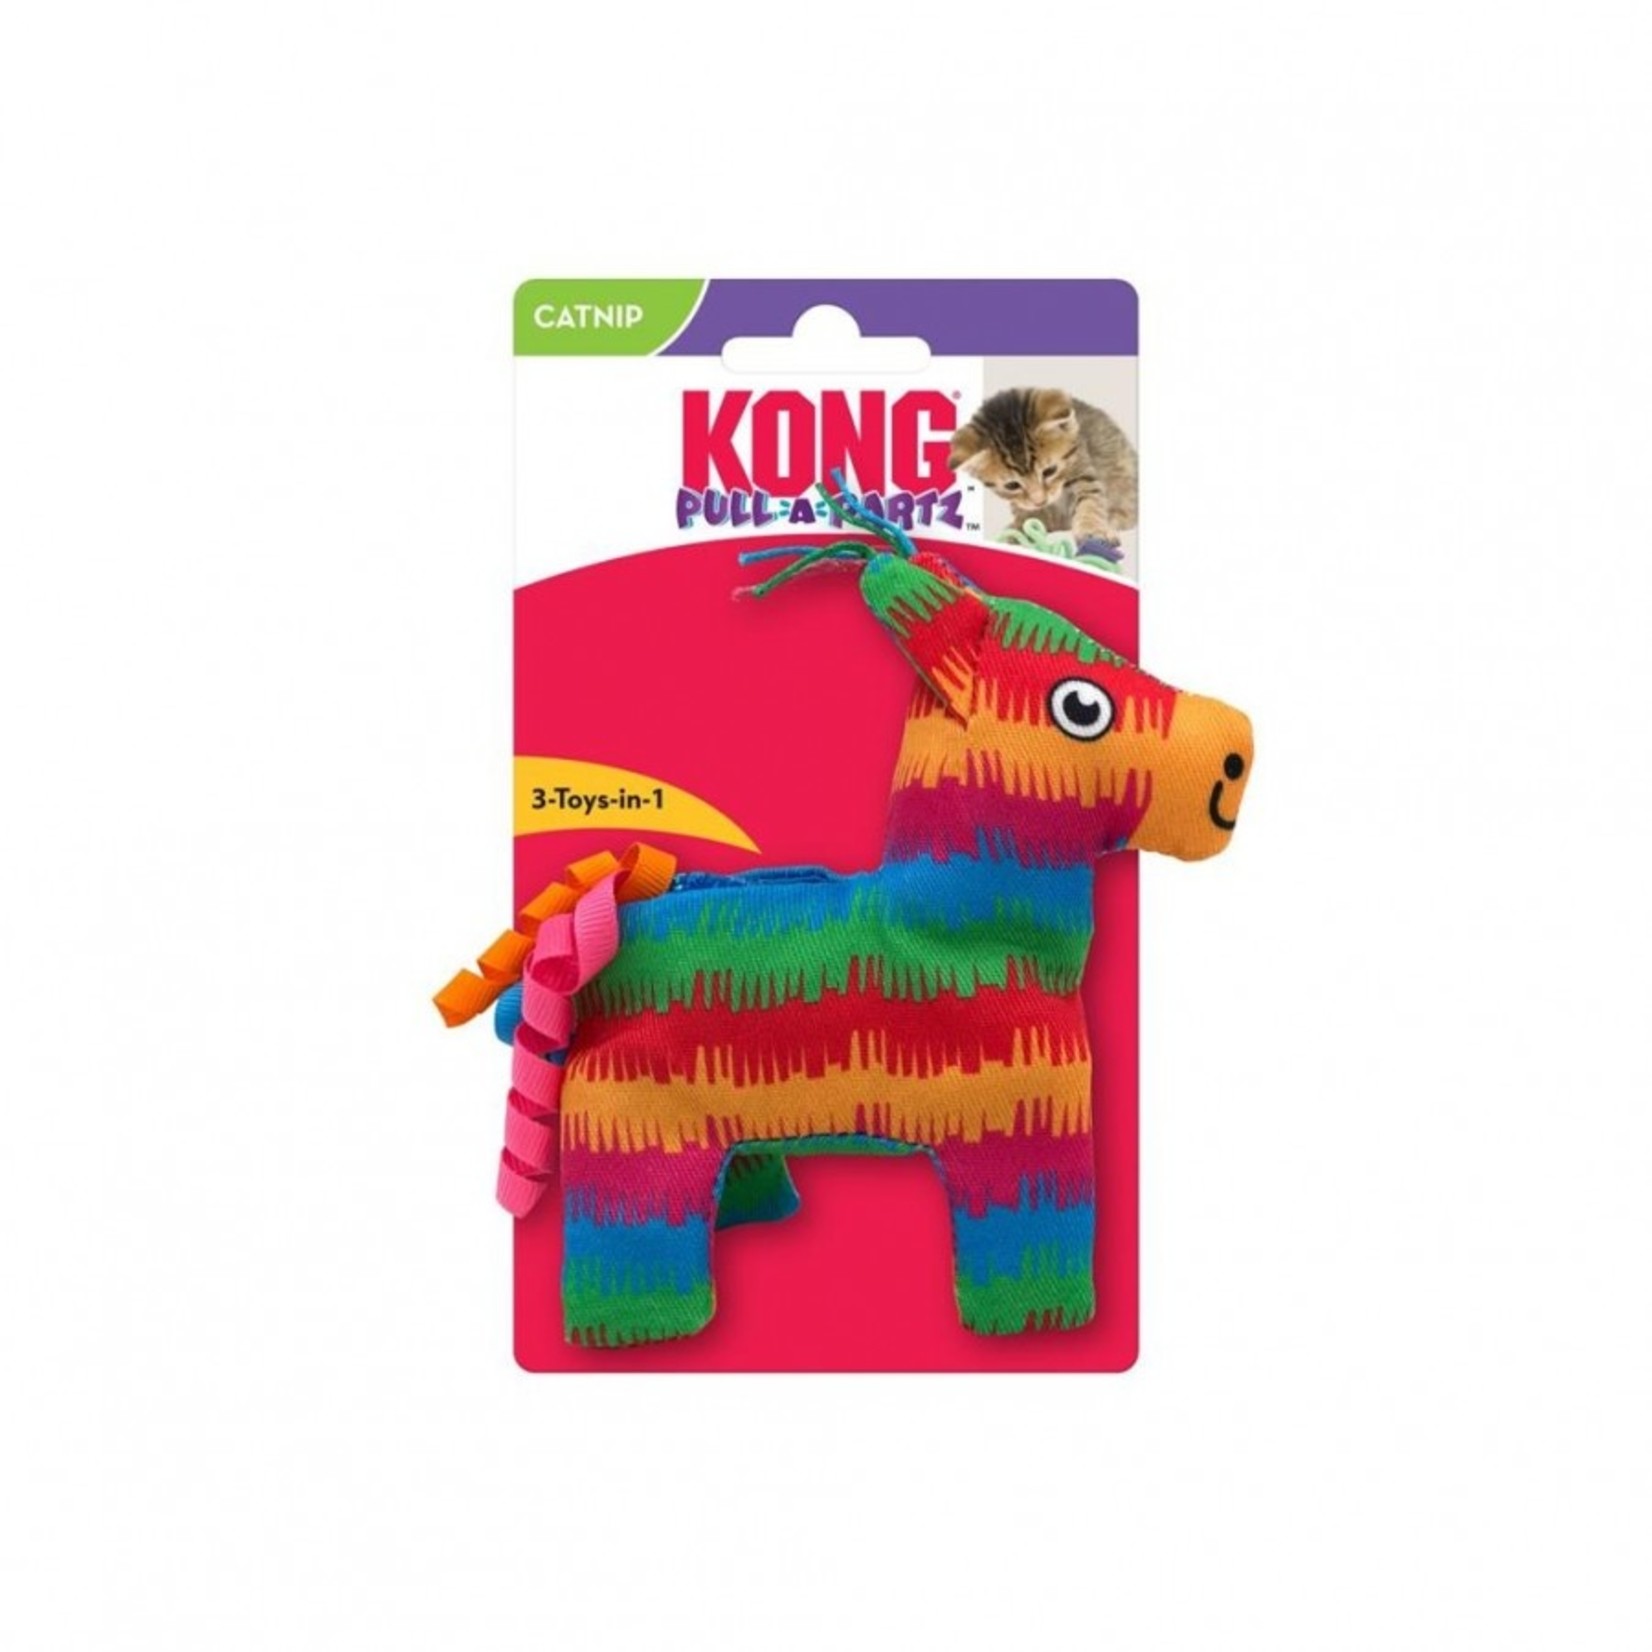 Kong Kong piñata cat toy